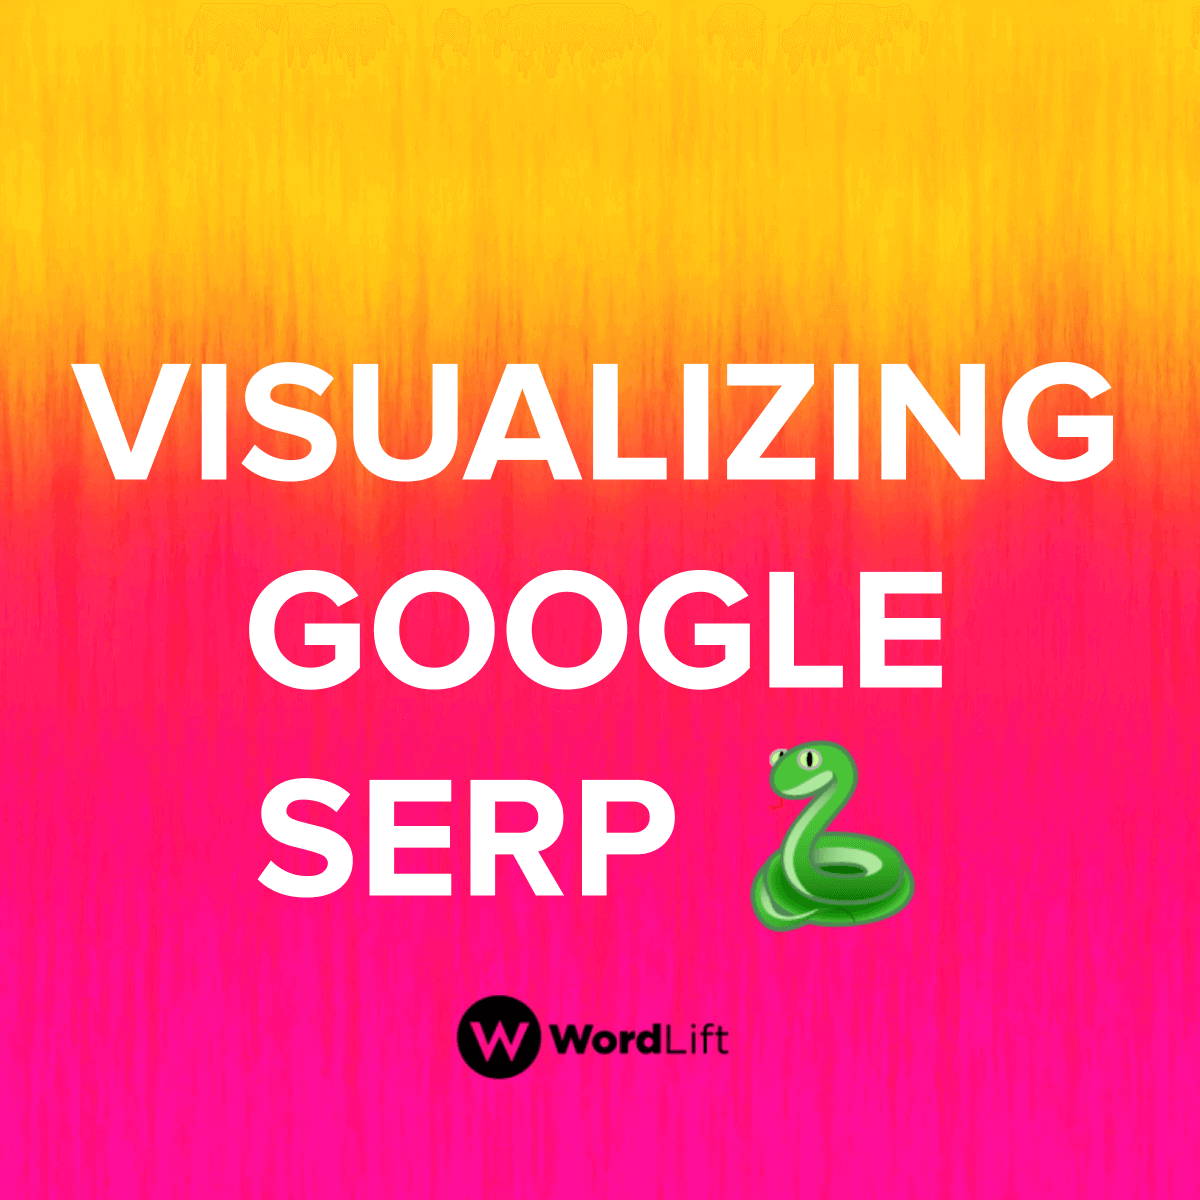 Visualizing Google SERP with Python